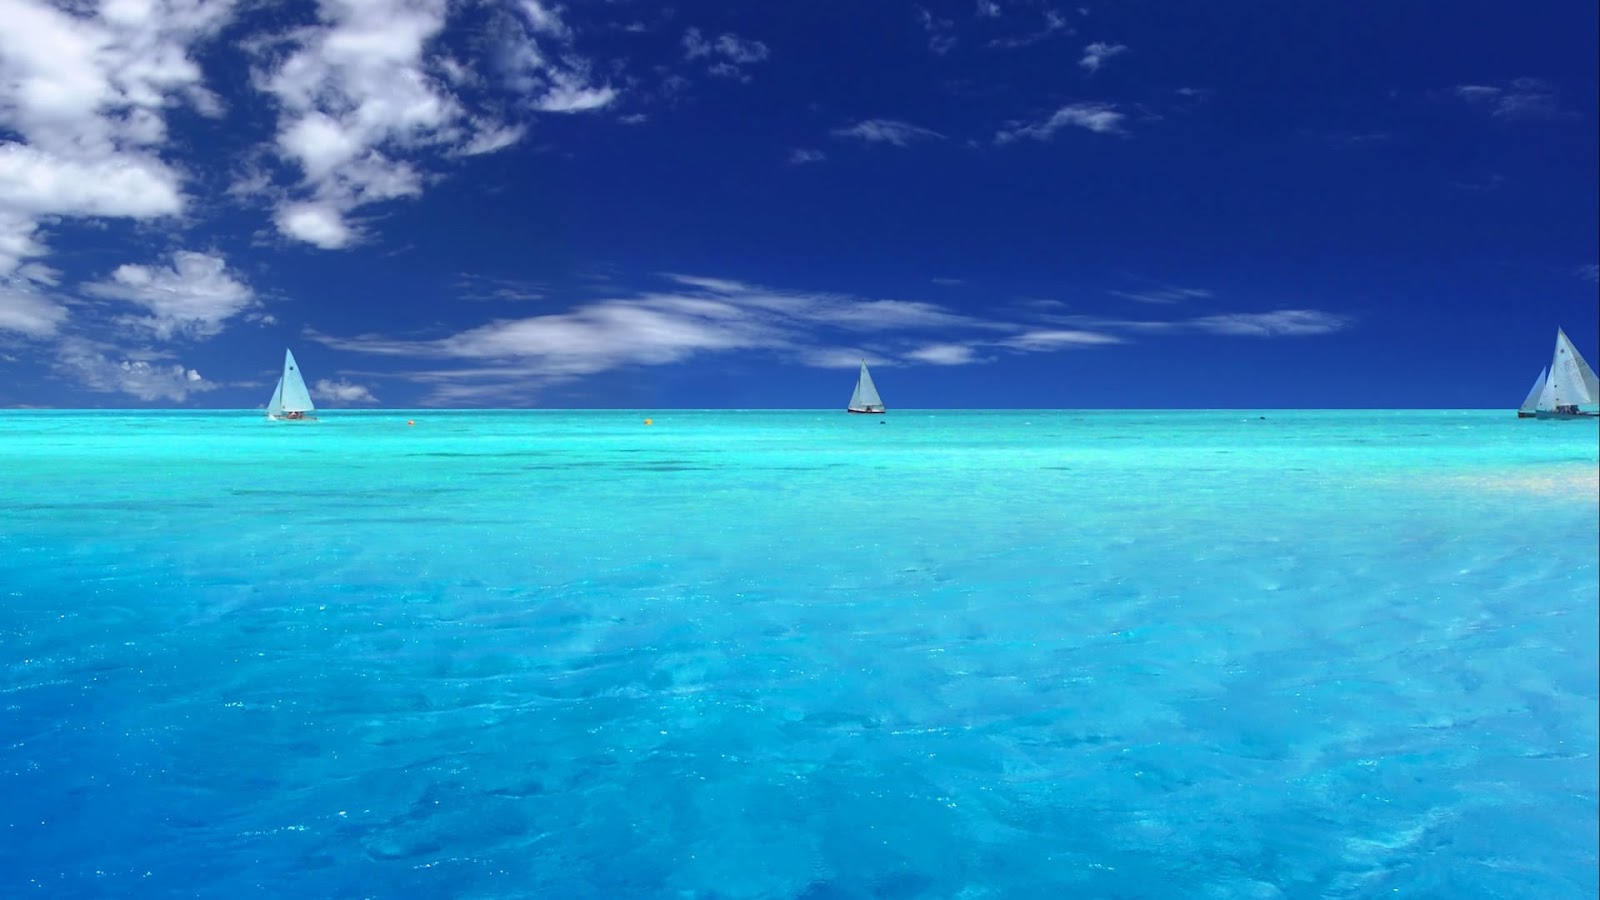 Blue Ocean Background